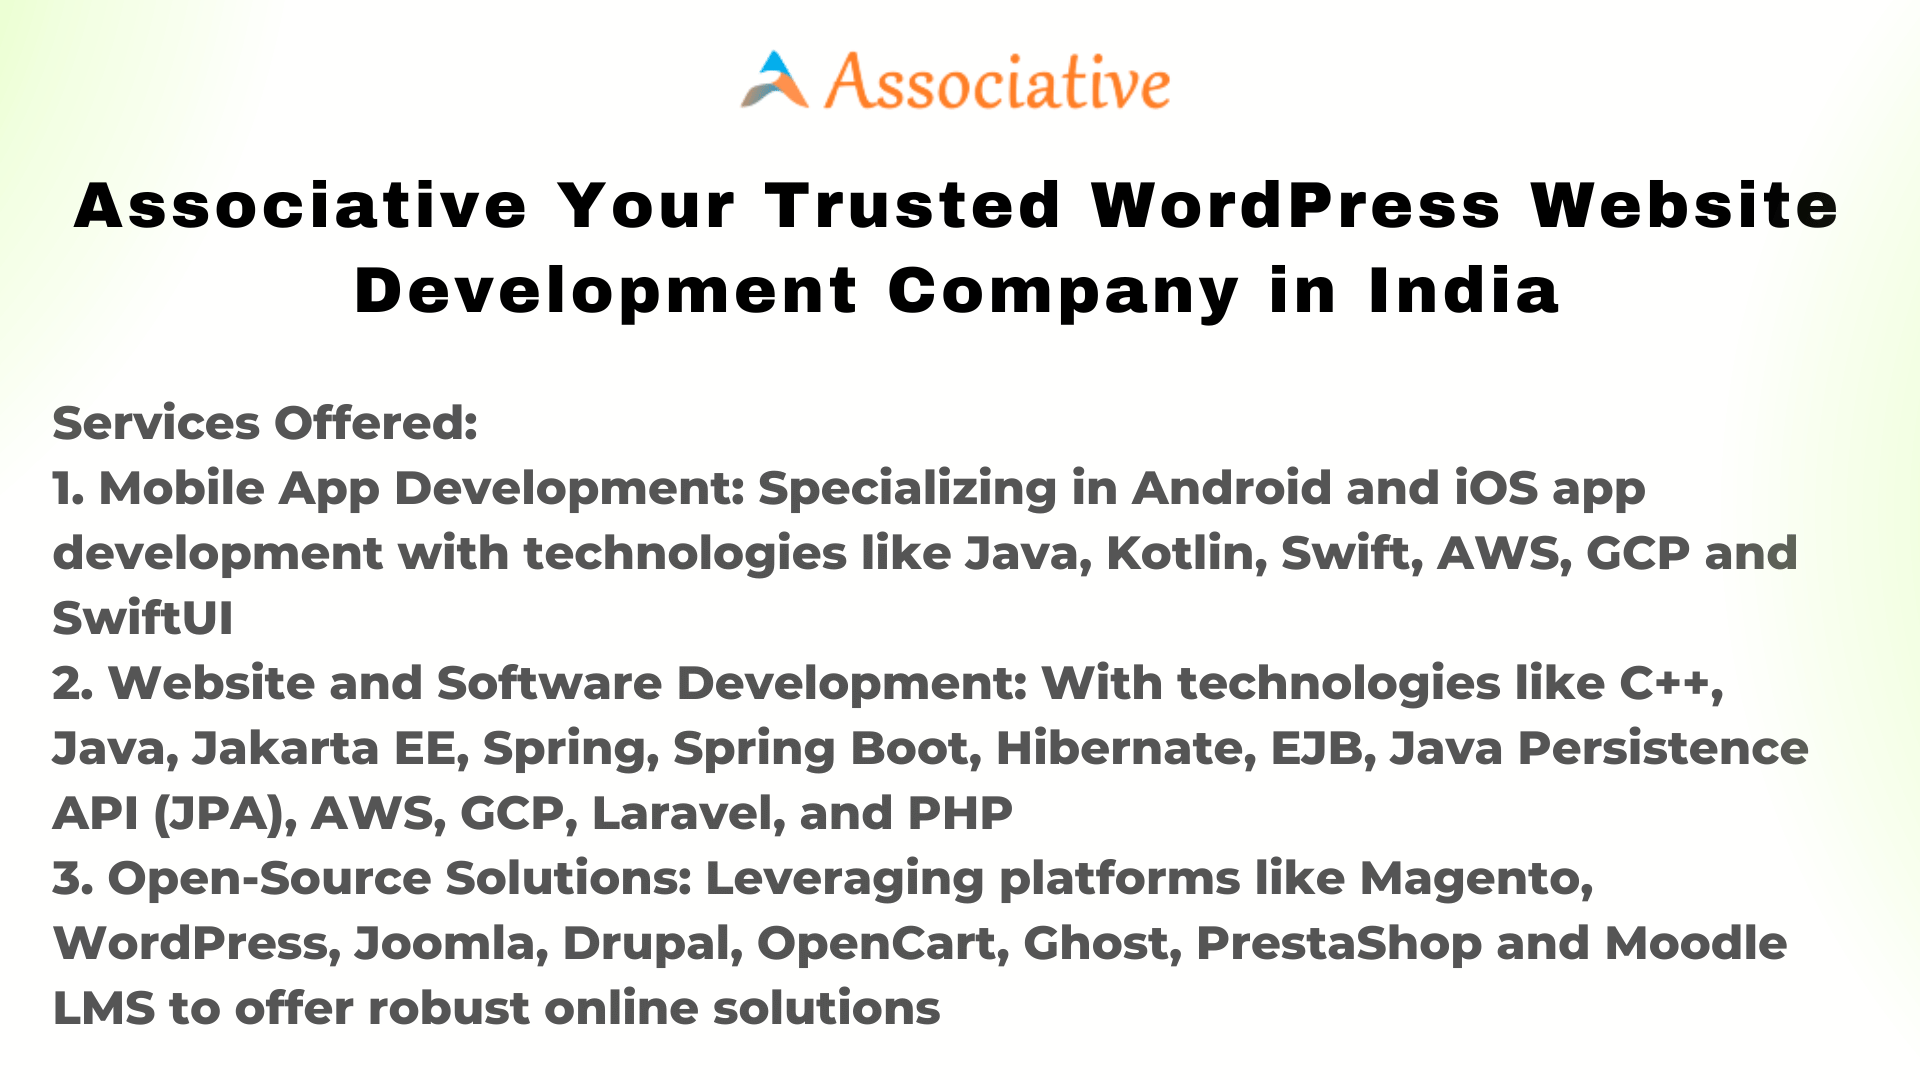 Associative Your Trusted WordPress Website Development Company in India